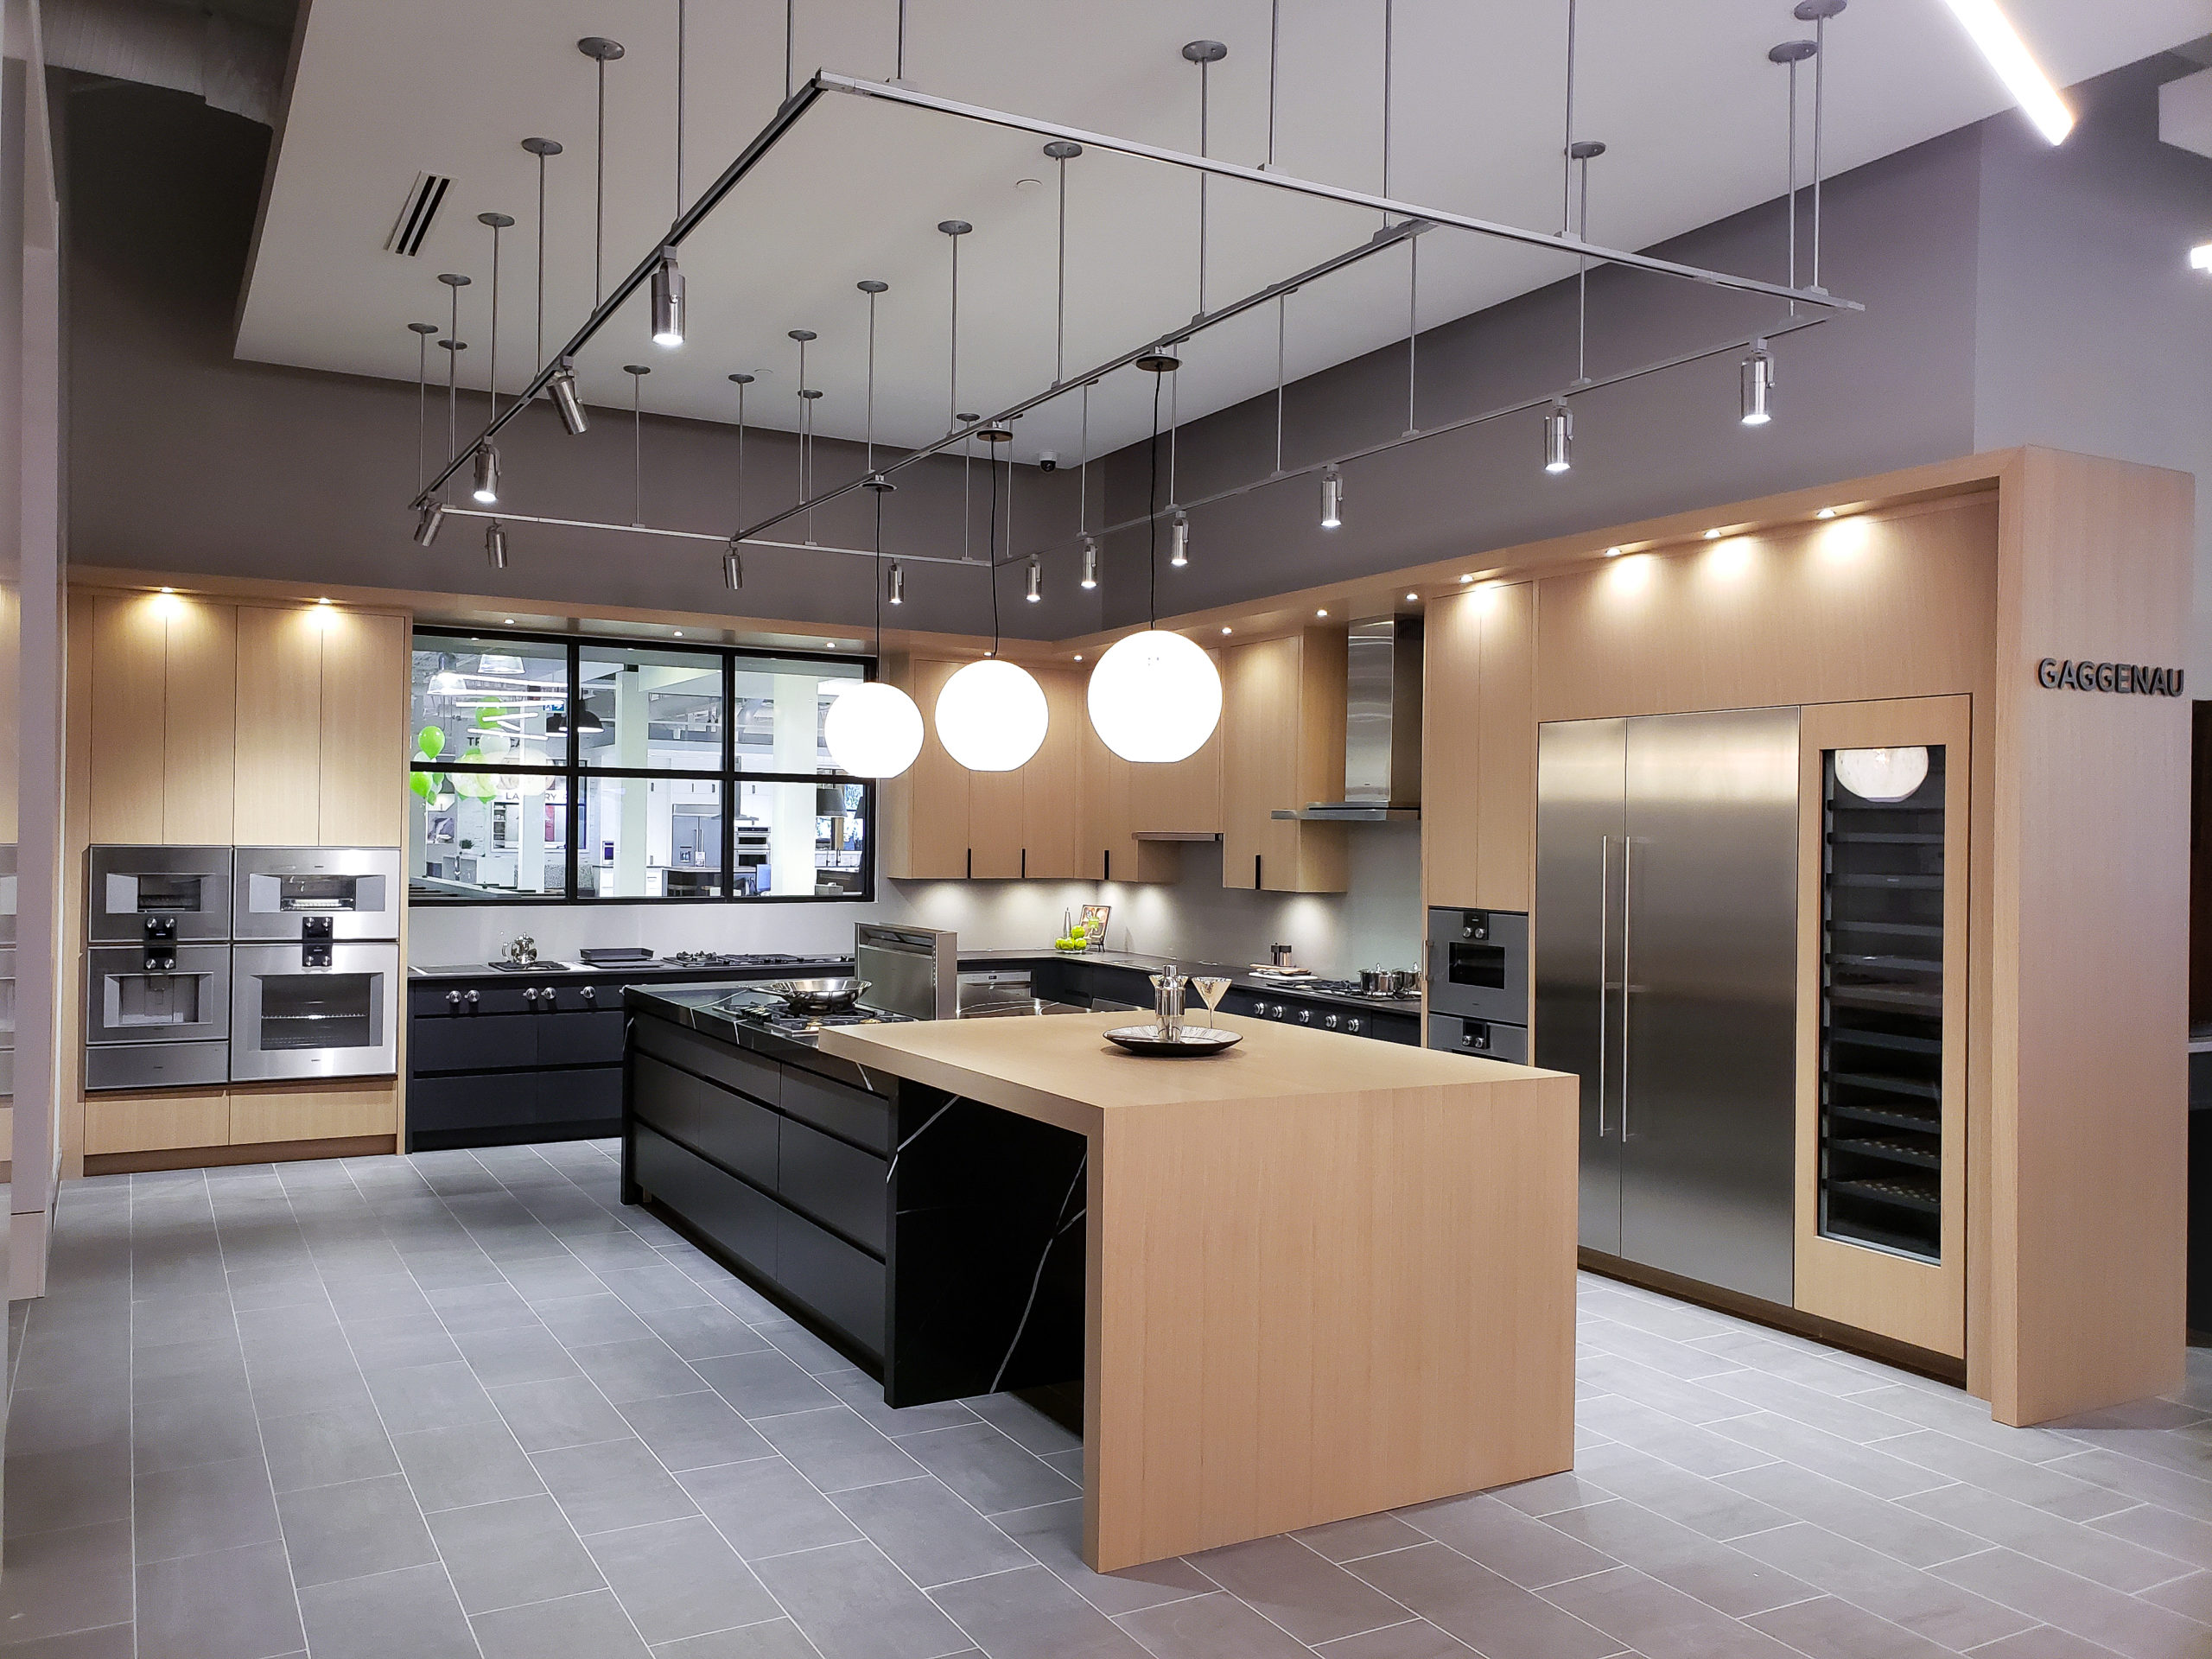 Inspiring Kitchen Design Styles for 2021 5